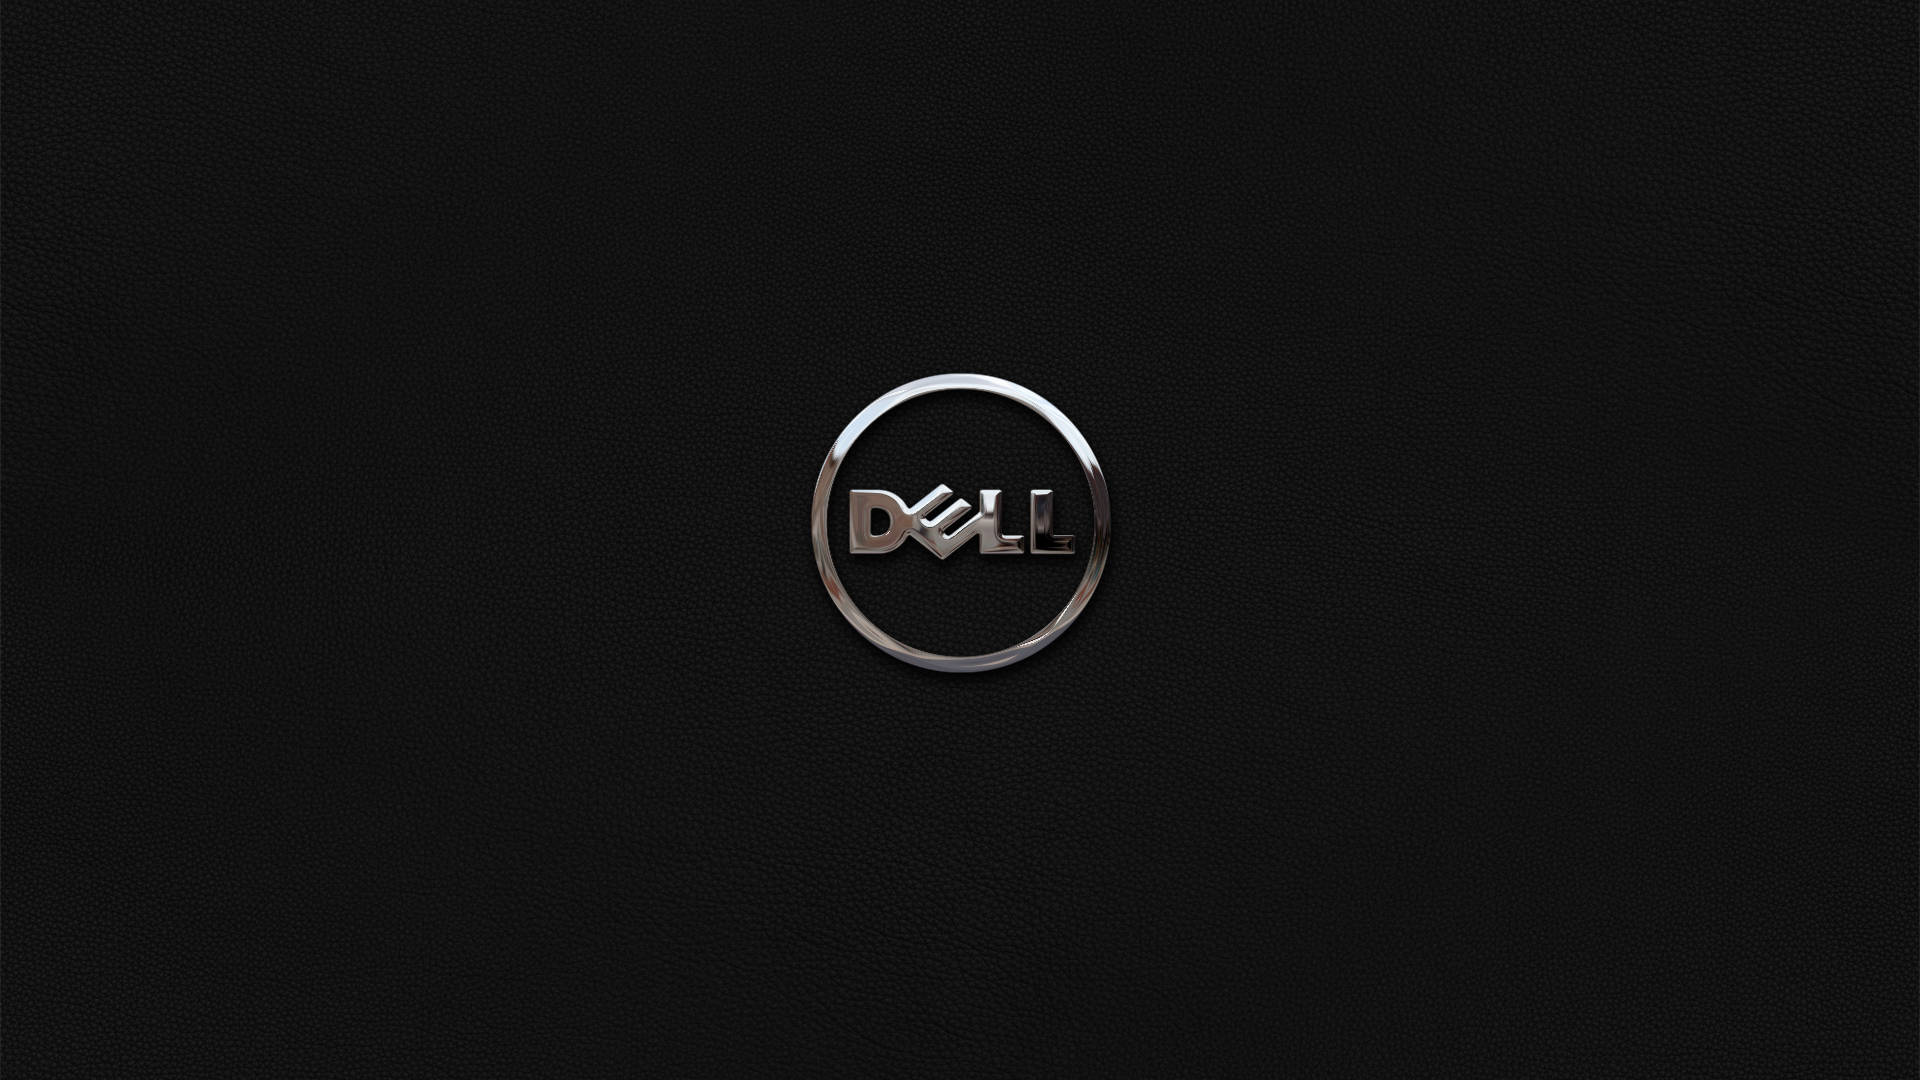 Metallic Dell Hd Logo Background